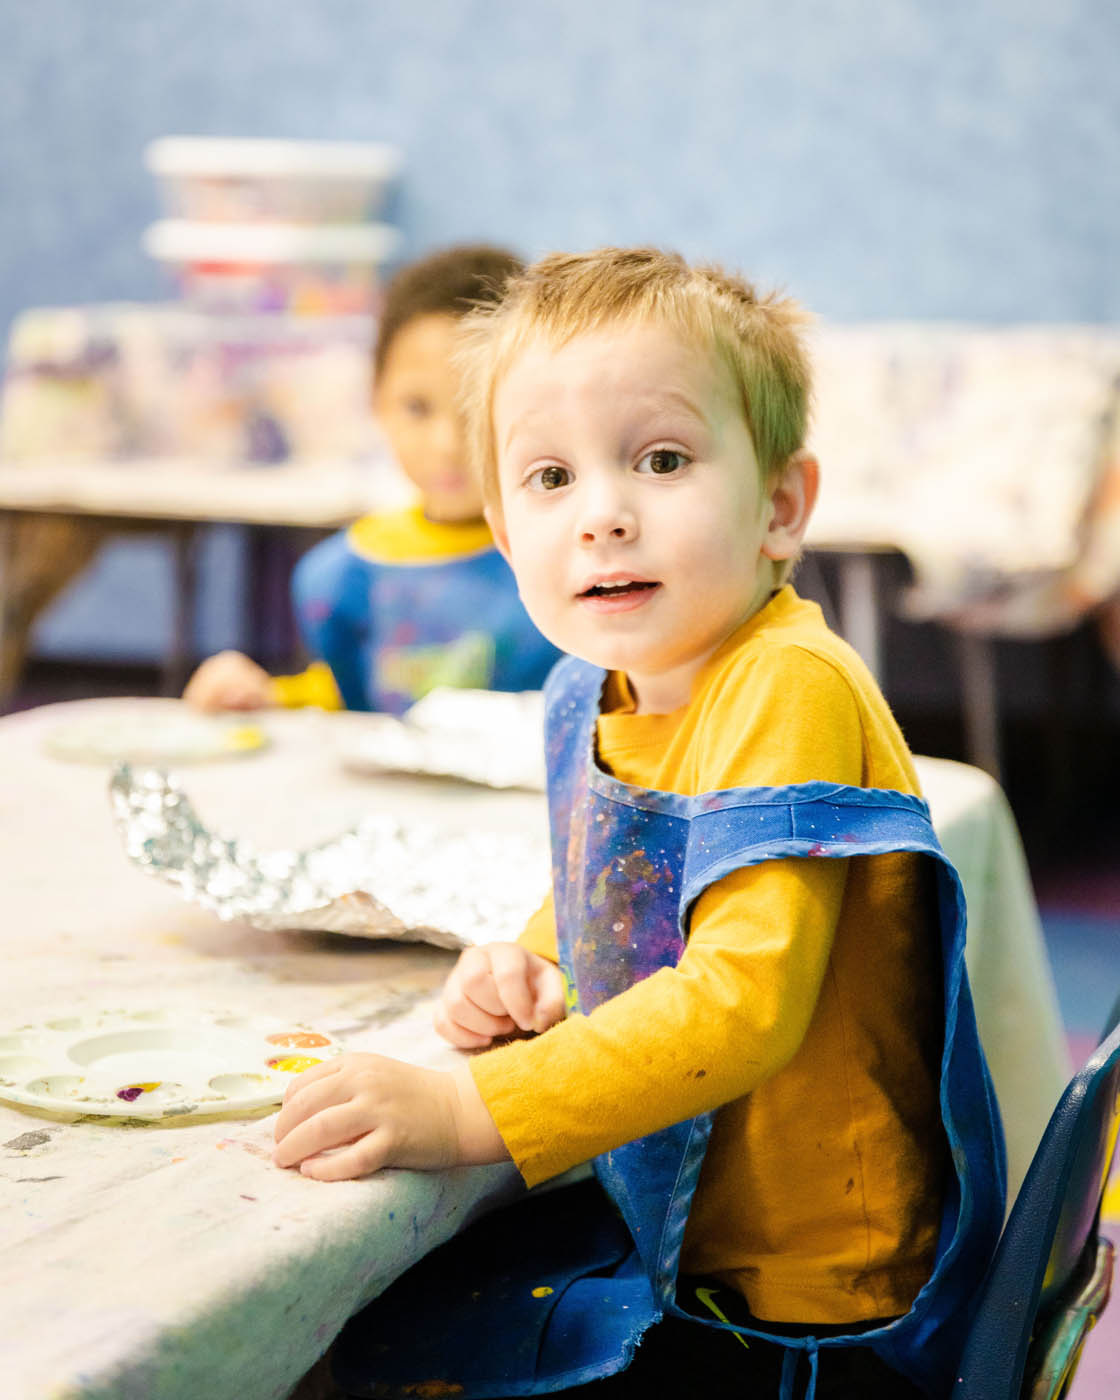 A boy in a yellow shirt in a toddler art class at Romp n' Roll.